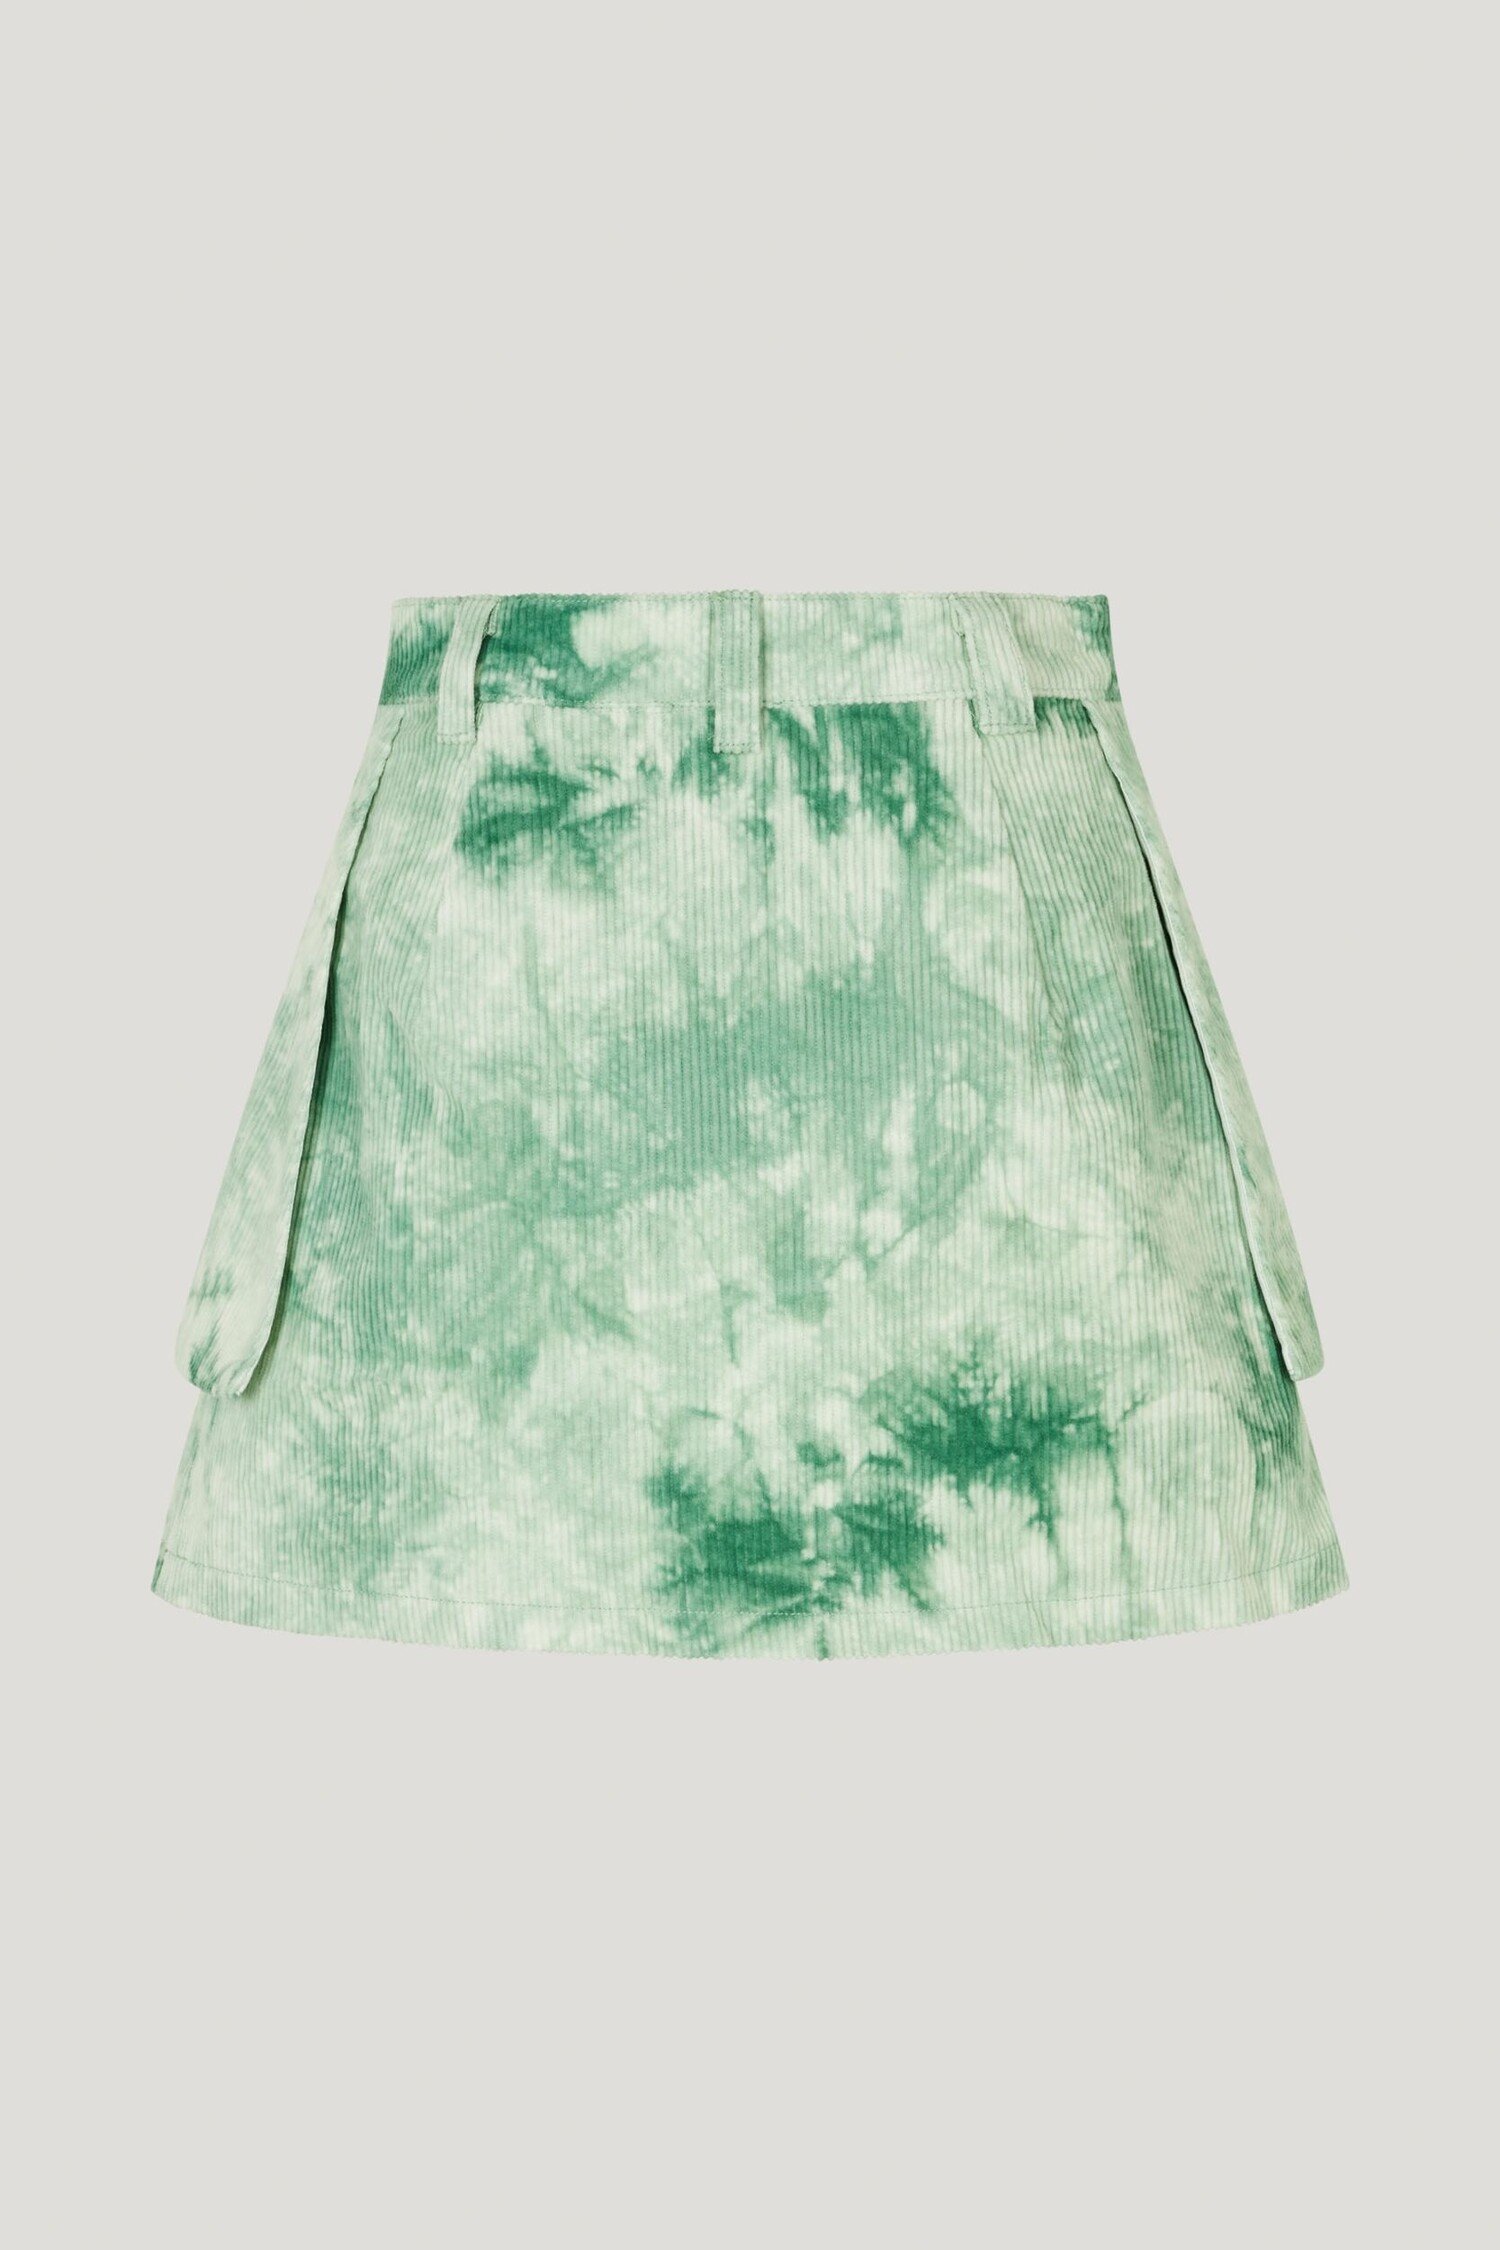 Mint Garden Dungaree Skirt, SOLAI